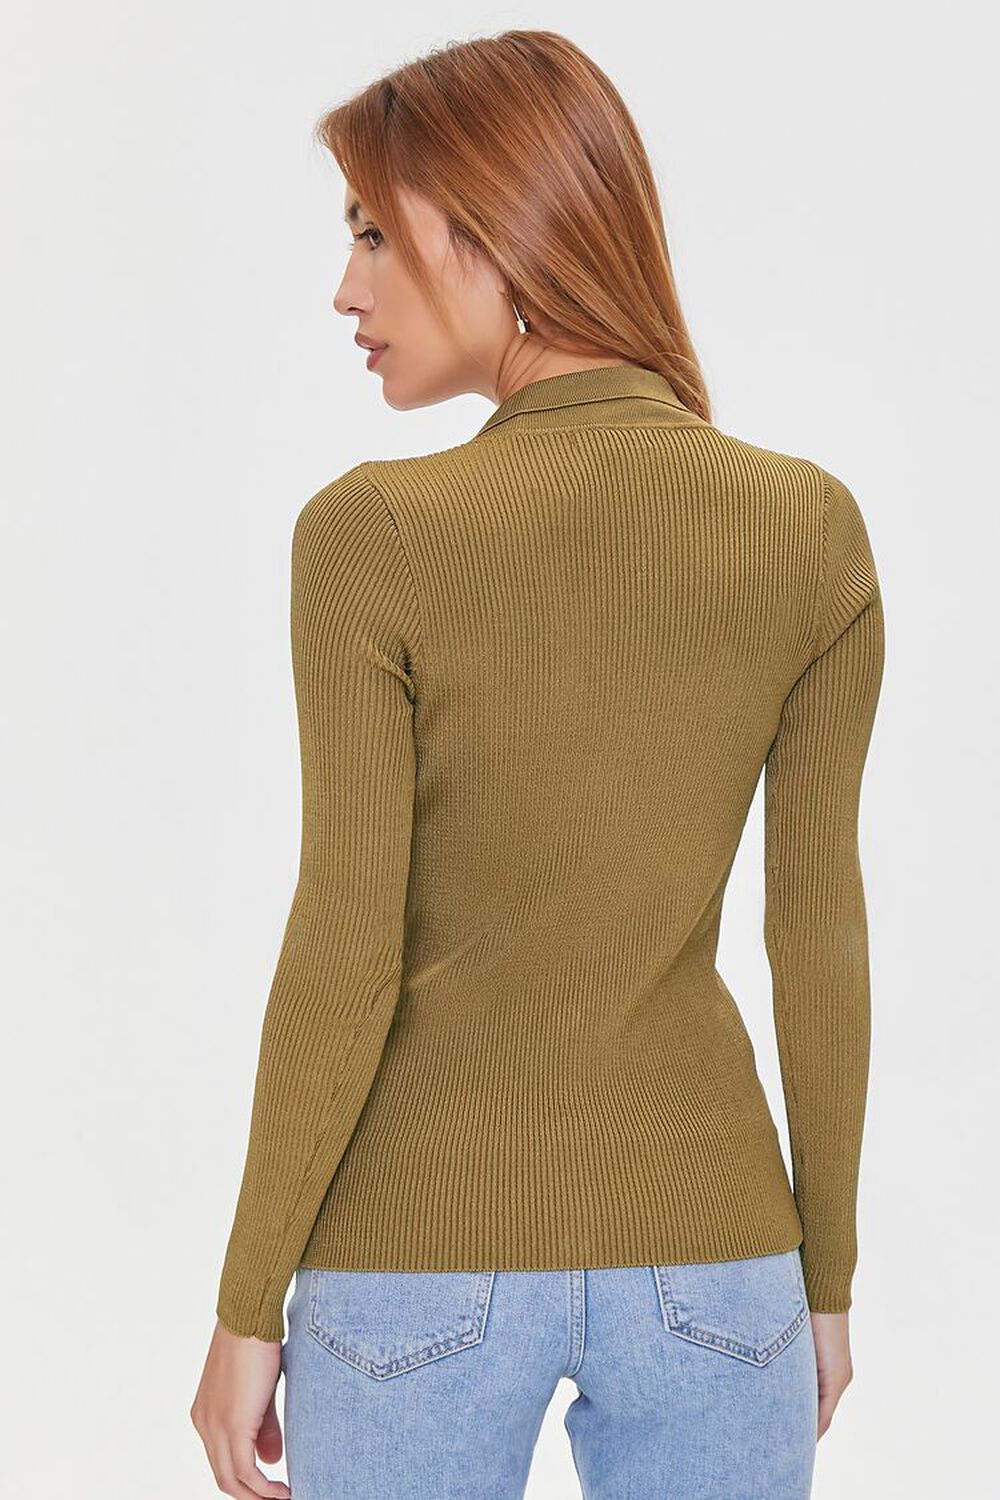 CIGAR Cardigan Sweater & Cropped Cami Set, image 3